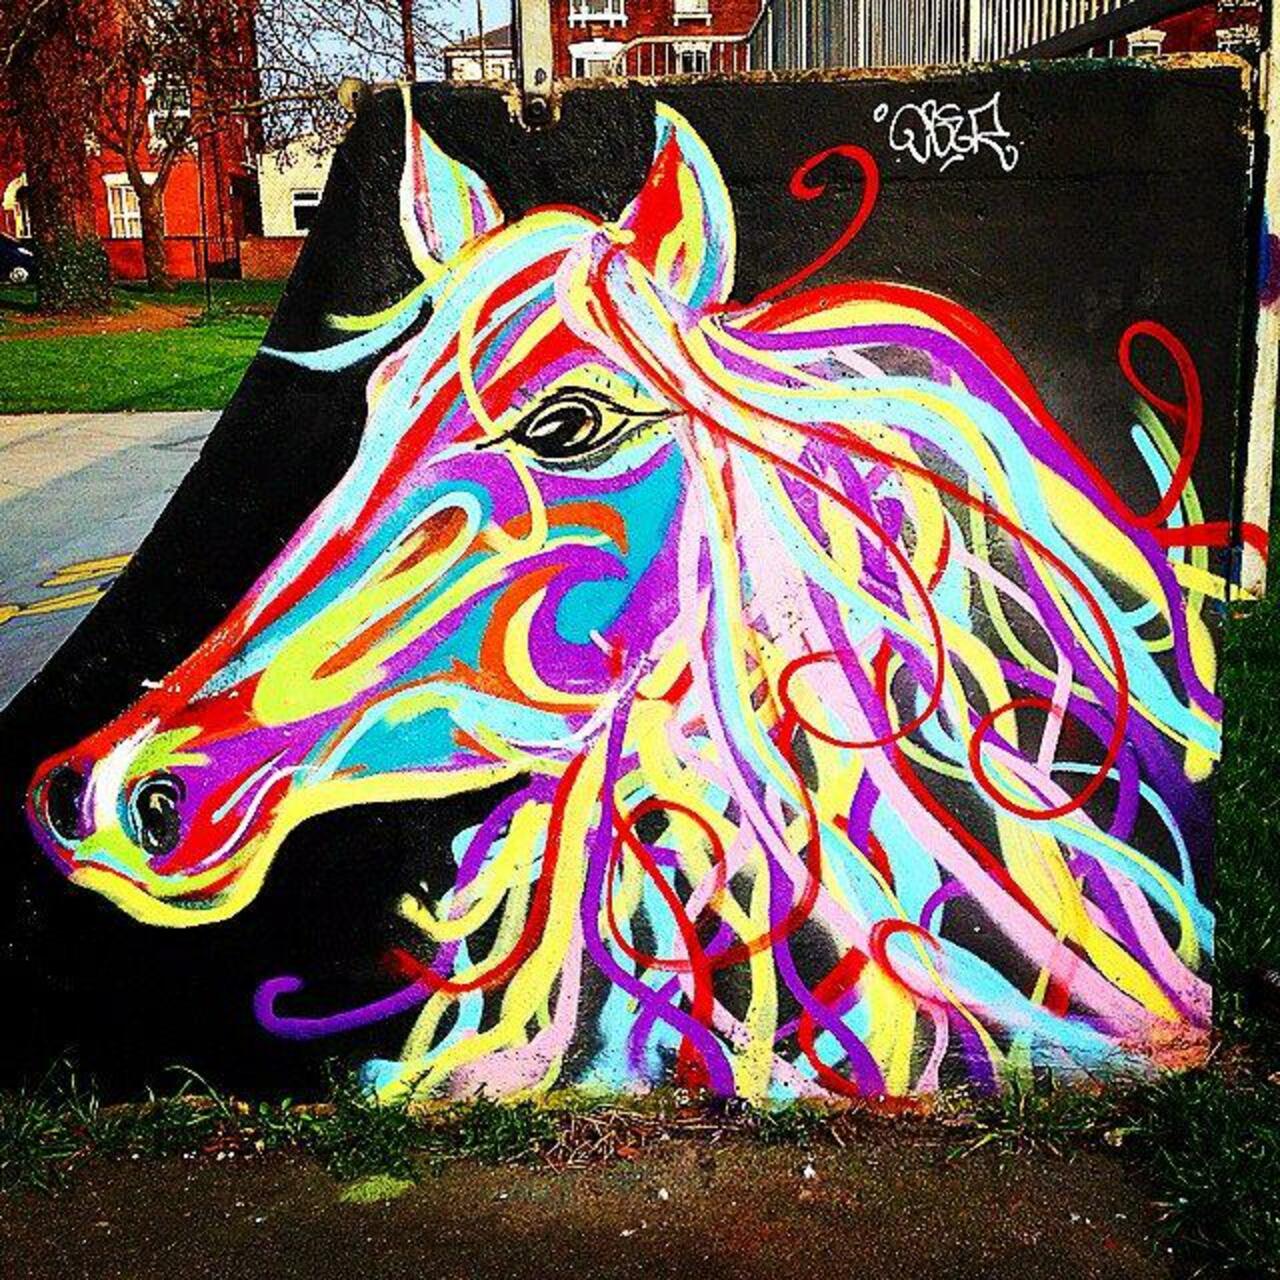 Found at #Glouceter city skatepark #streetart artist unknown #graffiti #photography #skatelife #horse @rtglos http://t.co/xlzImDj9CH